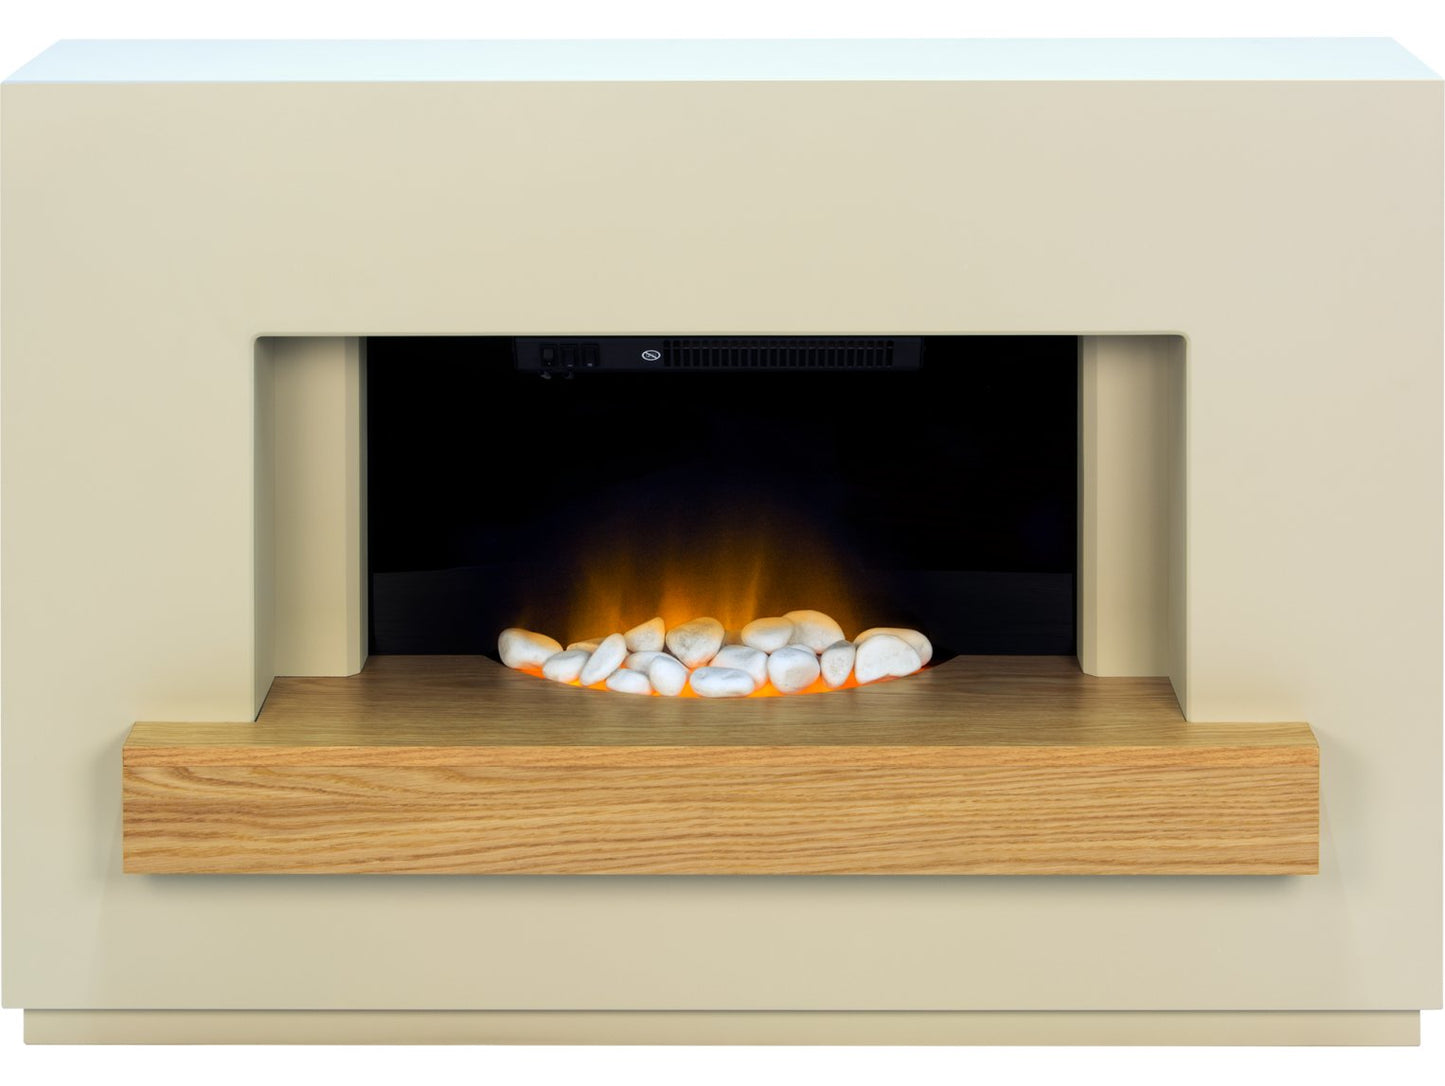 Adam Sambro Fireplace Suite in Stone Effect with Oak Shelf, 46 Inch